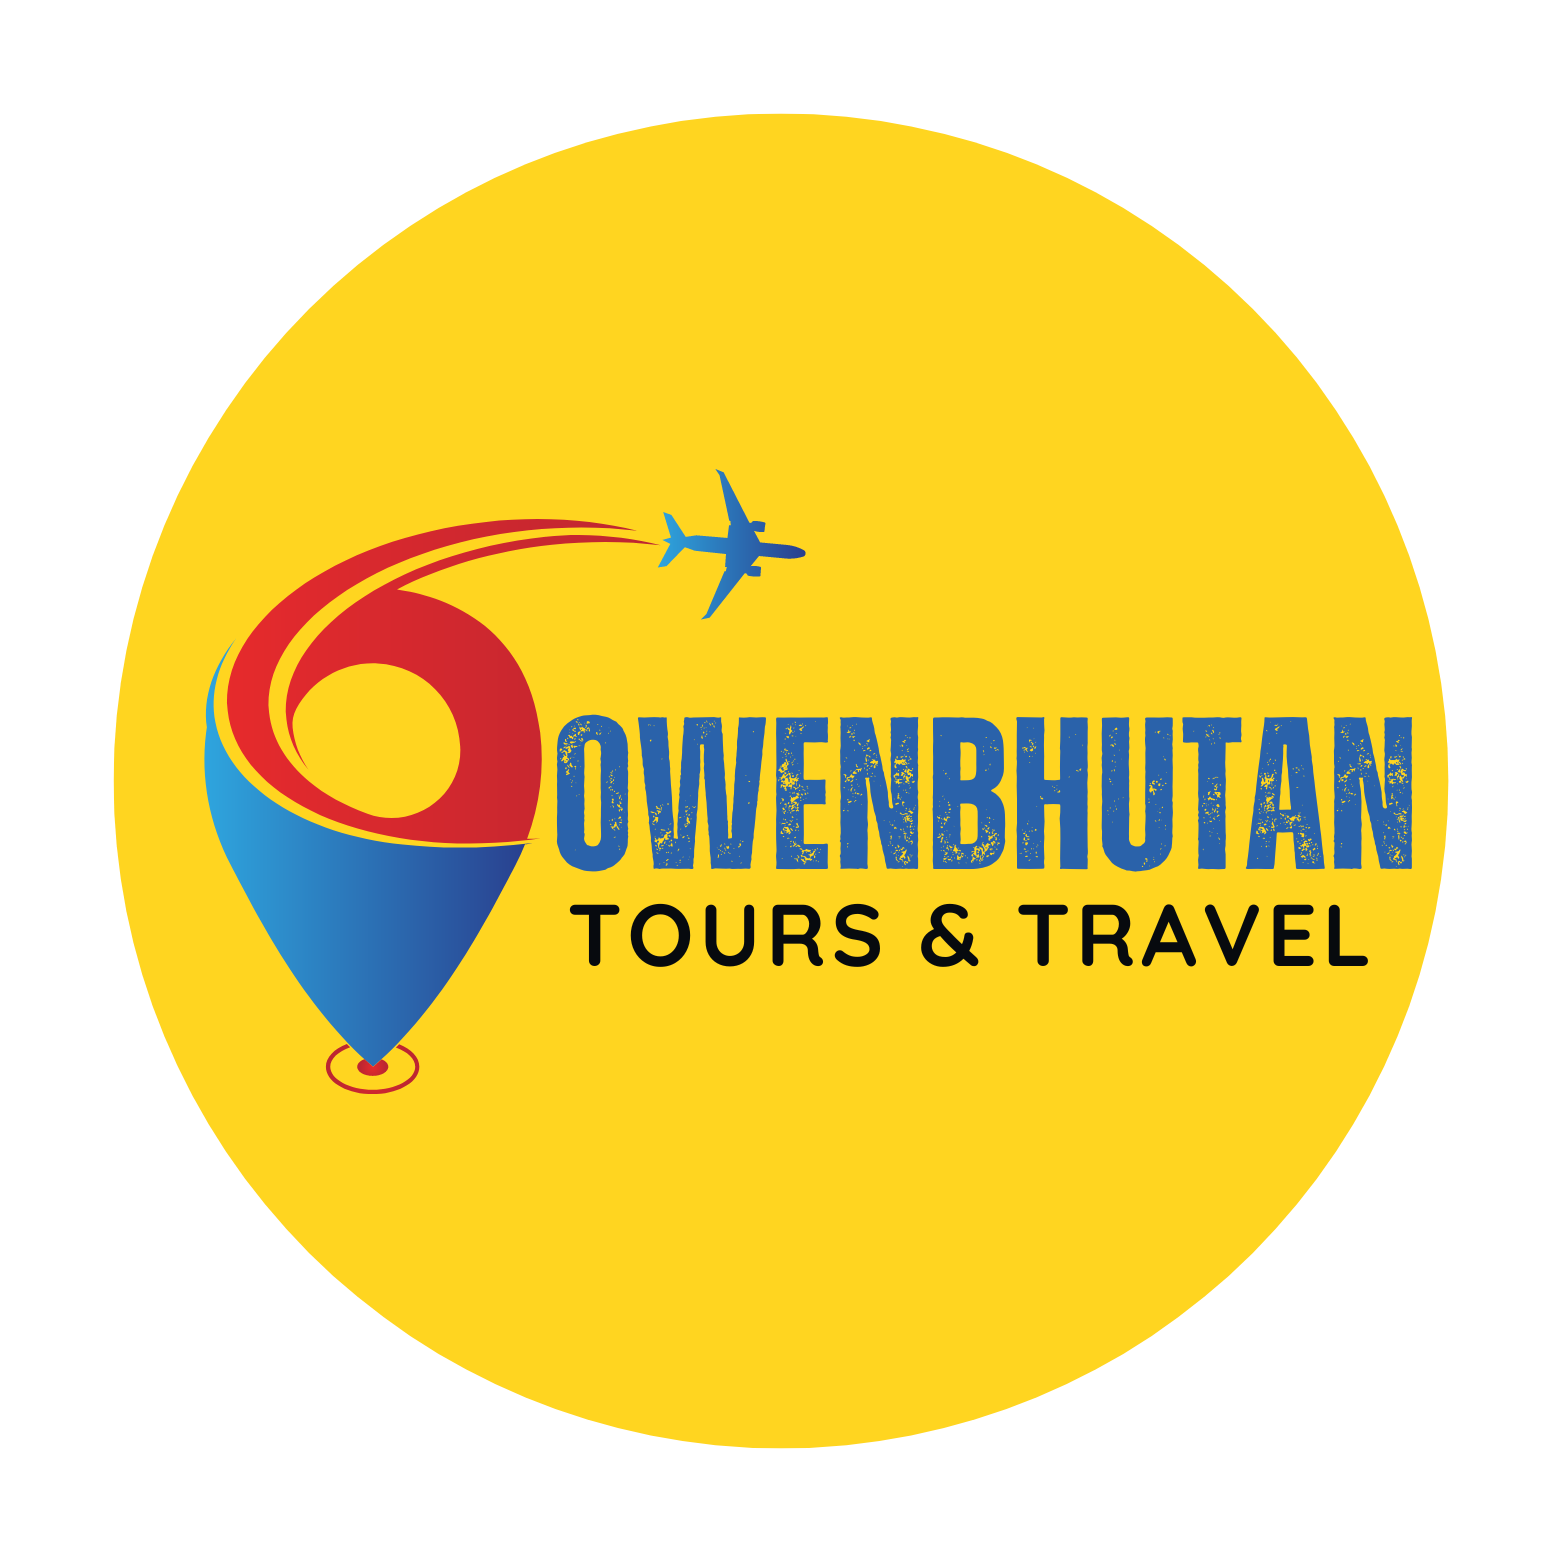 Owen Bhutan Tours and travel